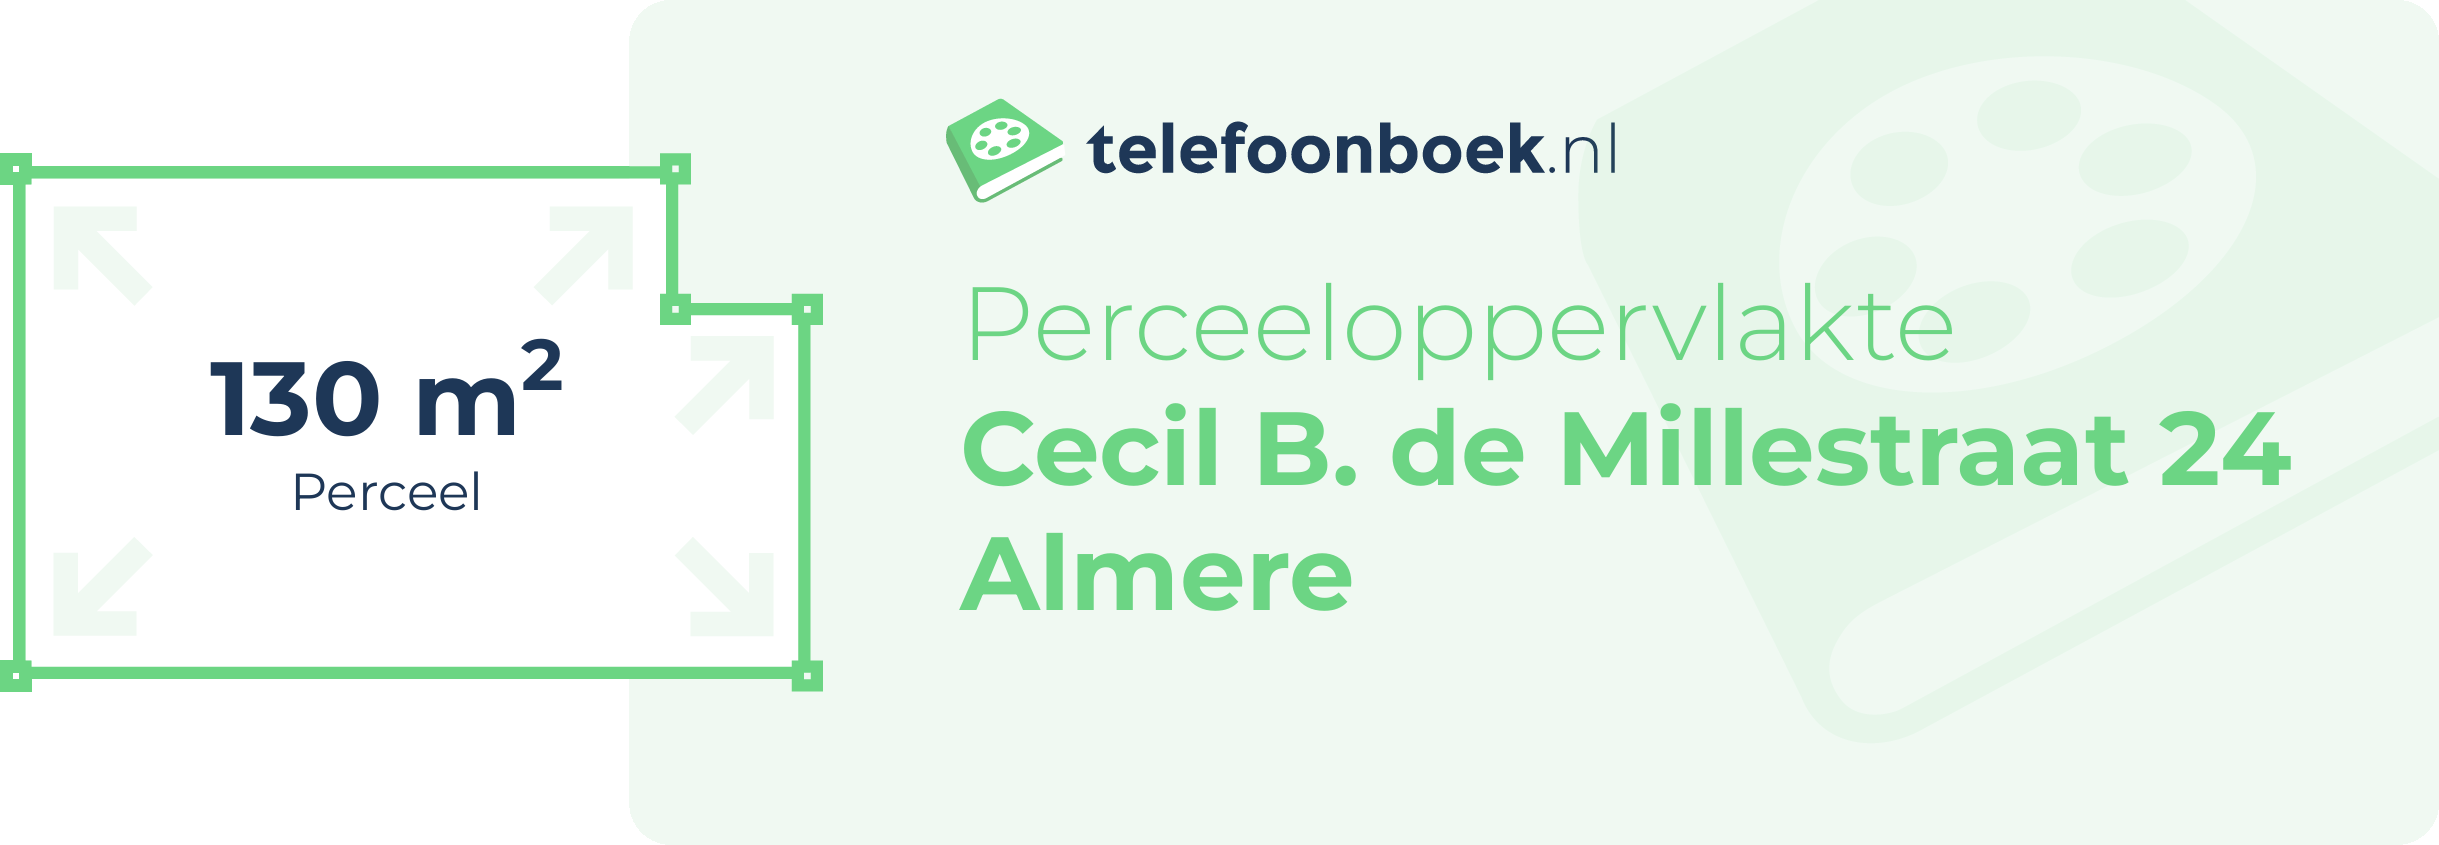 Perceeloppervlakte Cecil B. De Millestraat 24 Almere